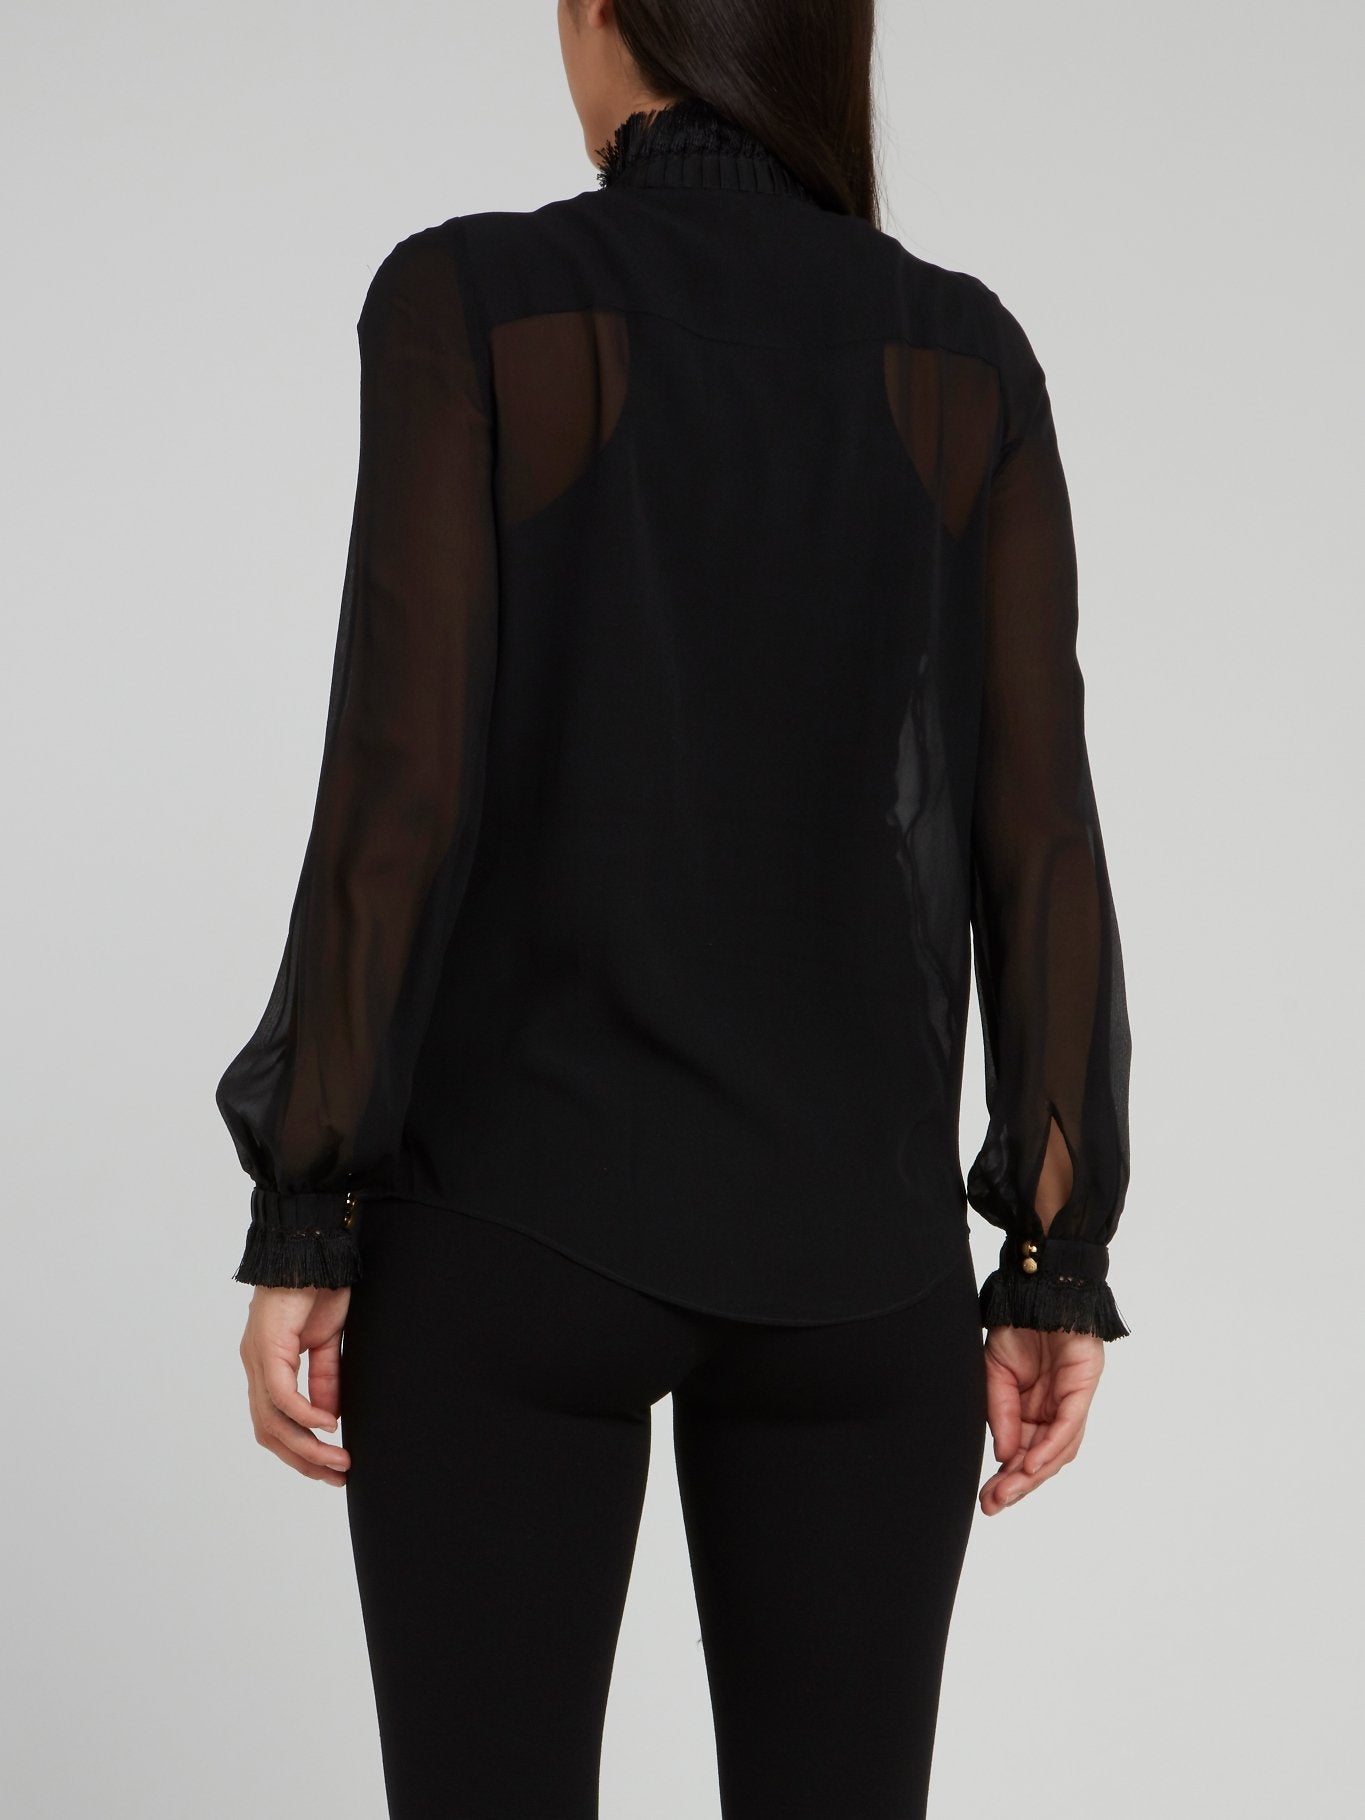 Черная прозрачная блузка с бахромой и манжетами